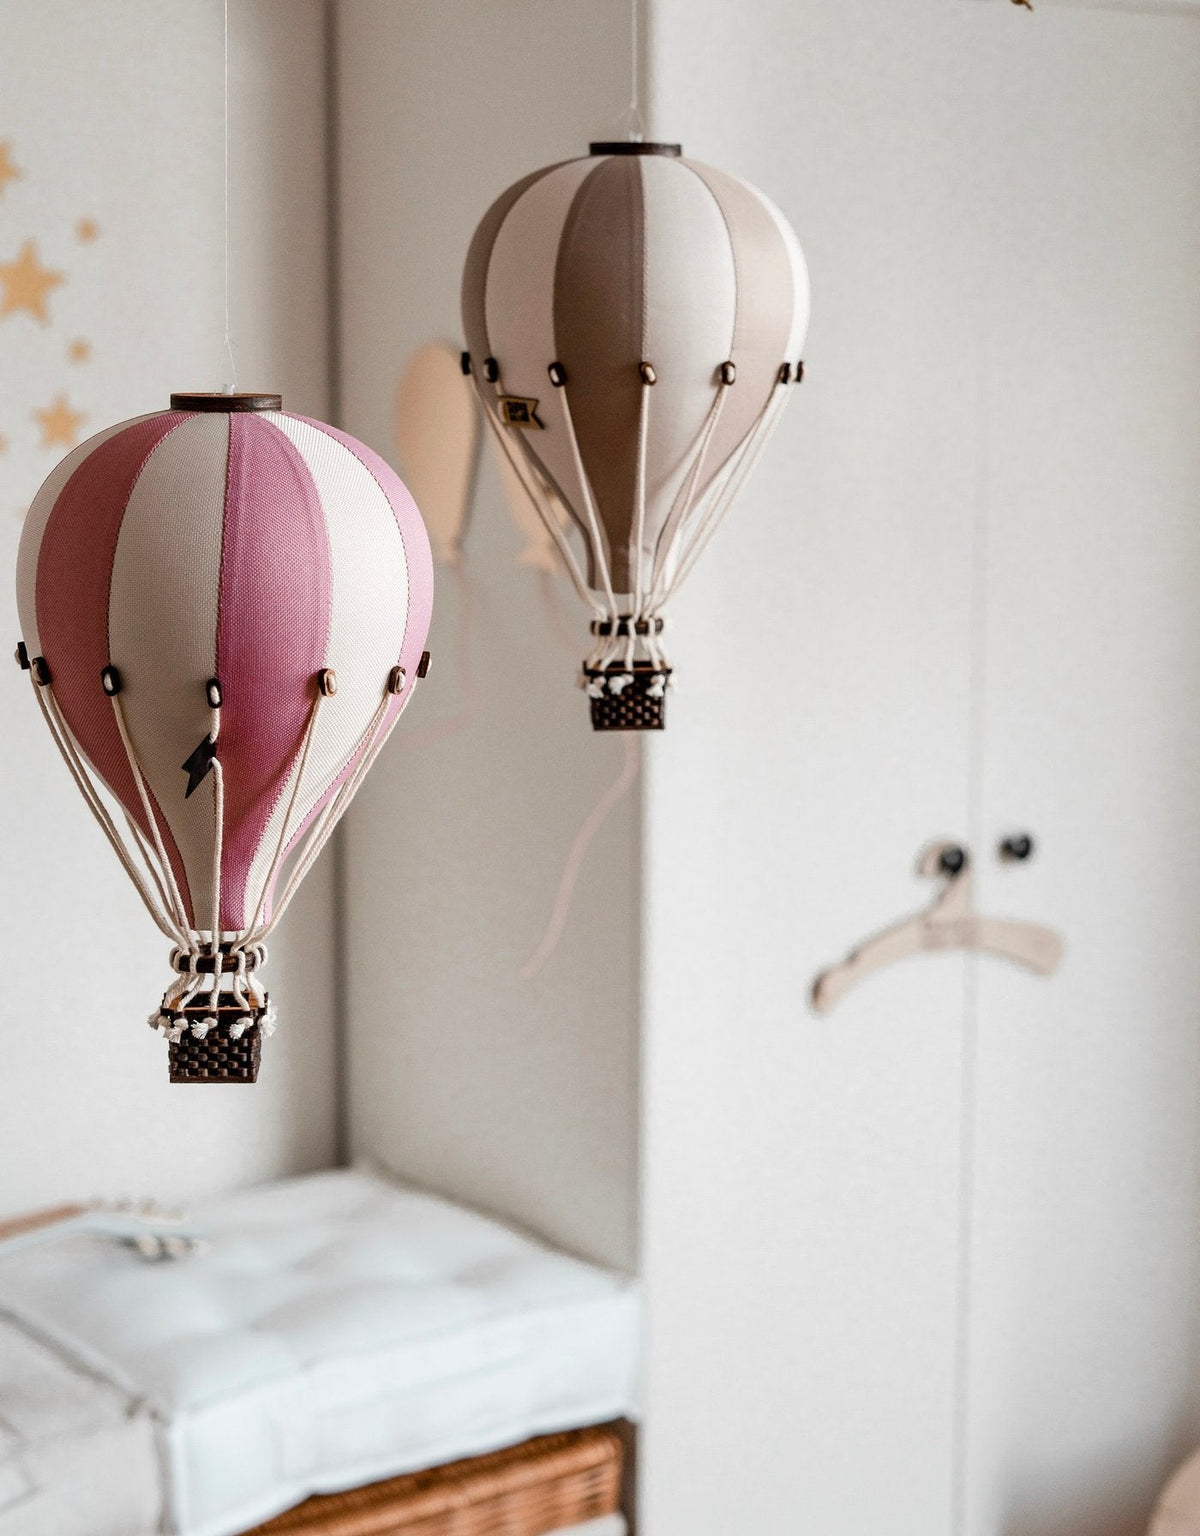 Decorative Hot Air Balloon | Medium by Super Balloon - Maude Kids Decor